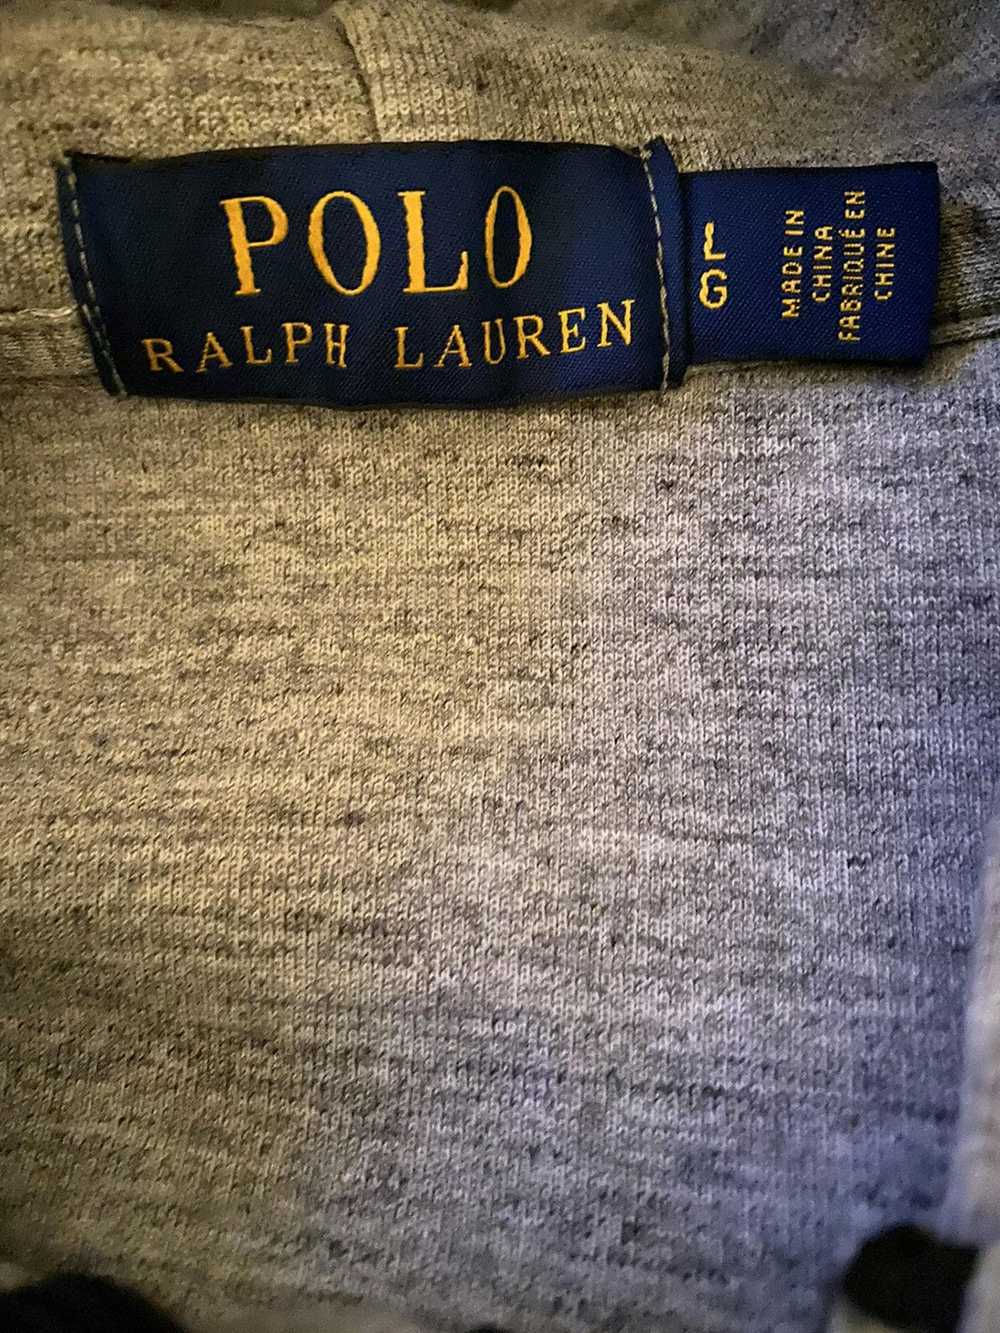 Polo Ralph Lauren Light weight zip up Polo jacket - image 1